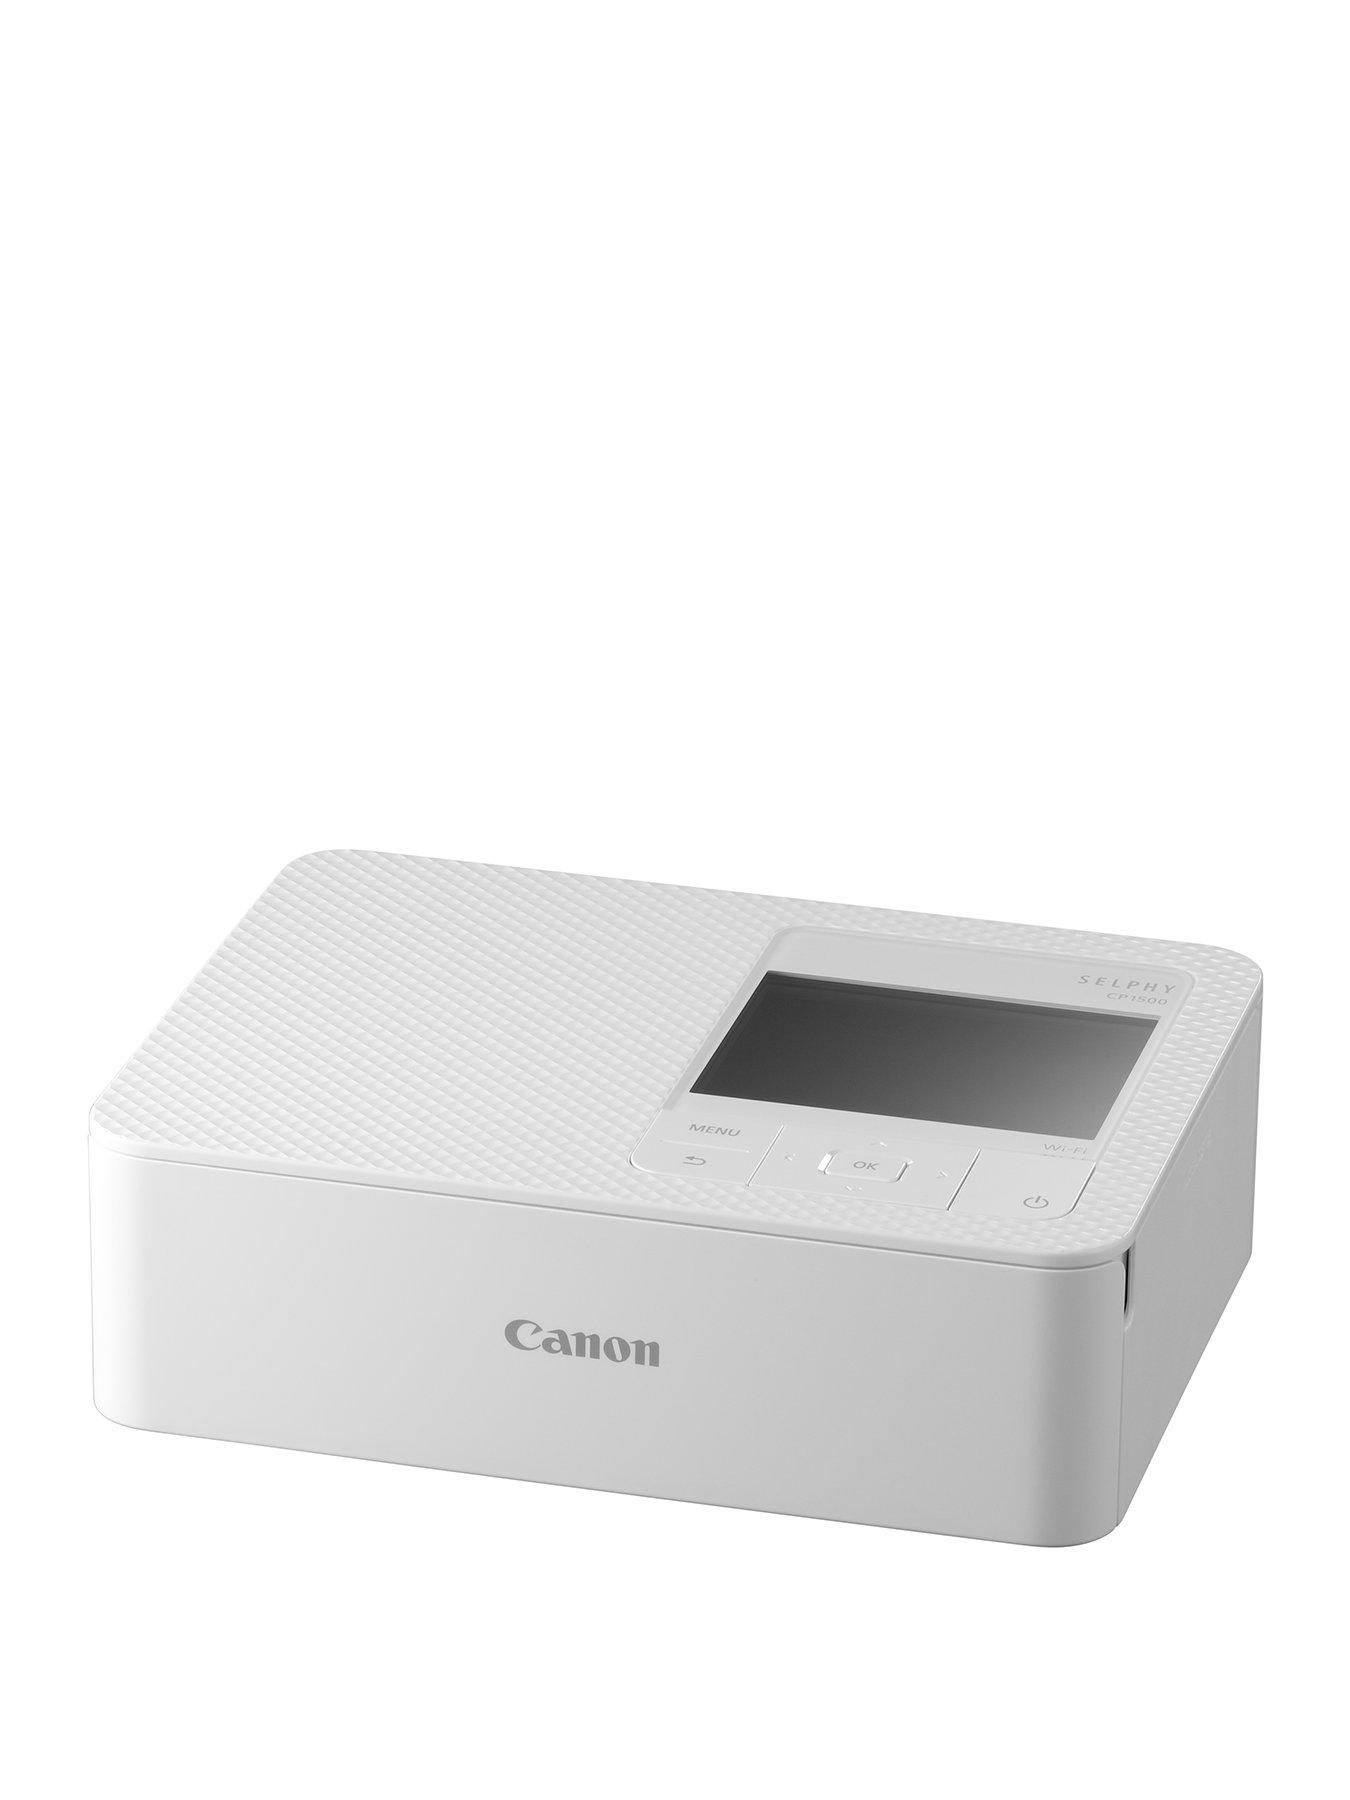 Canon Selphy Cp1500 Compact Wifi Photo Printer - White